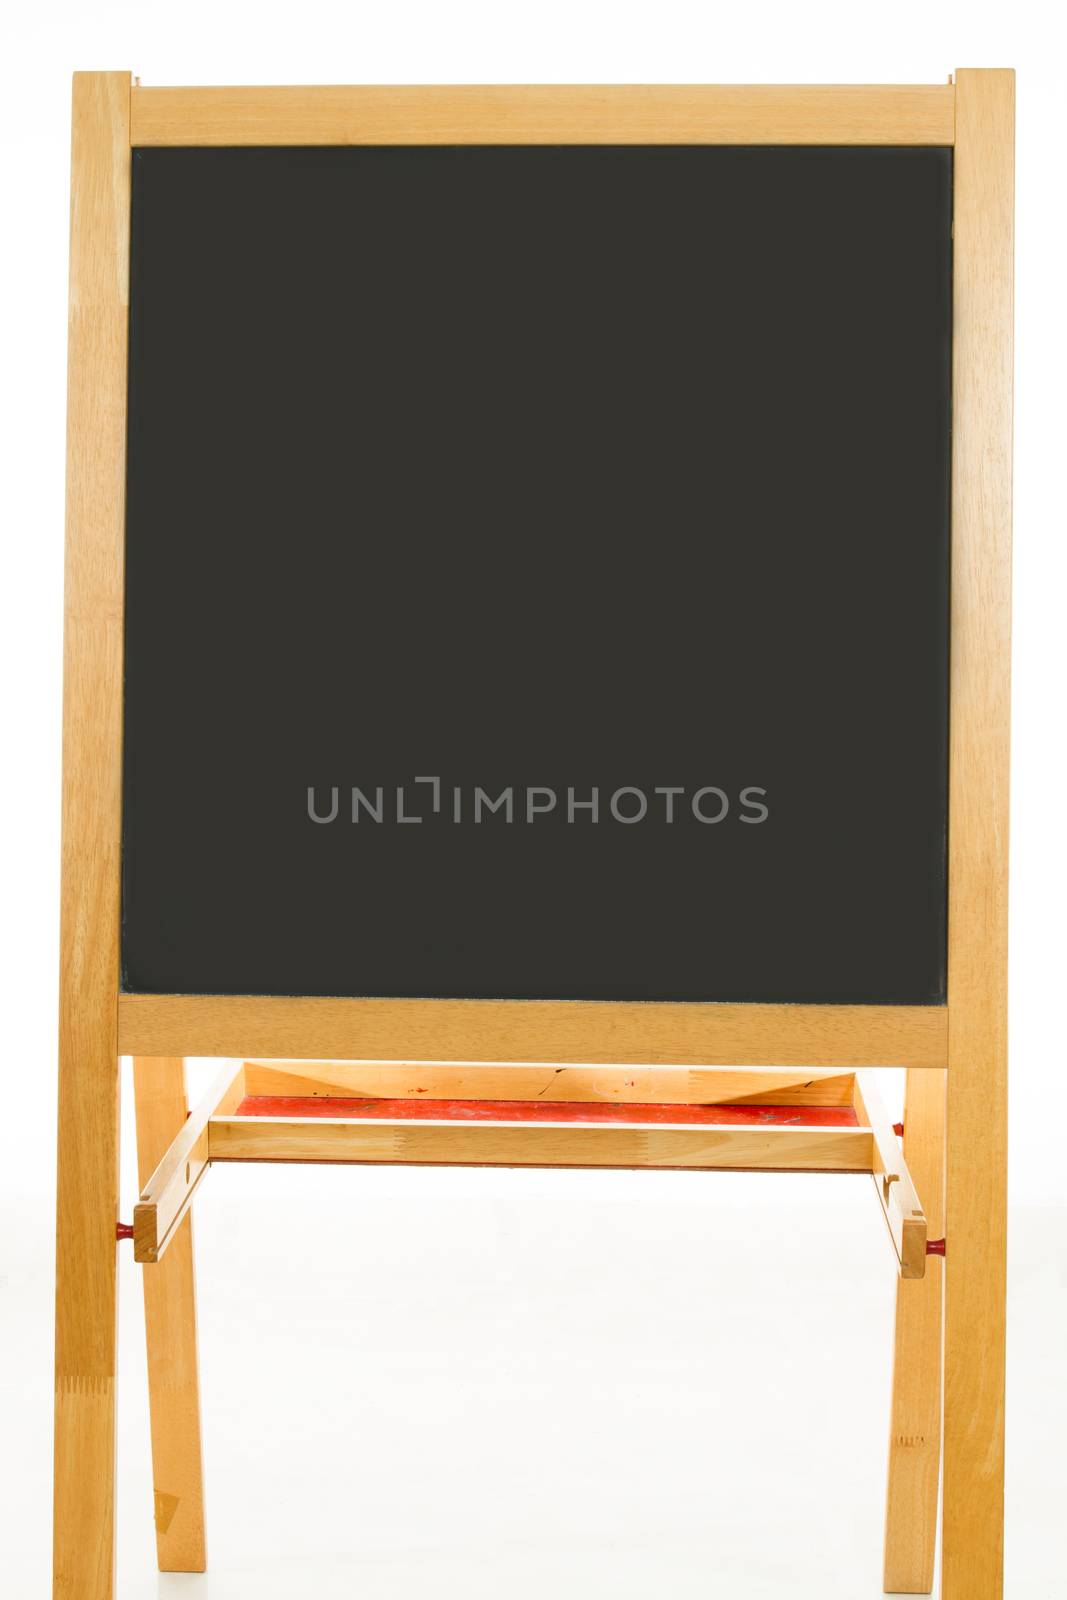 Blank menu blackboad or chalkboard in isolated plain white background.